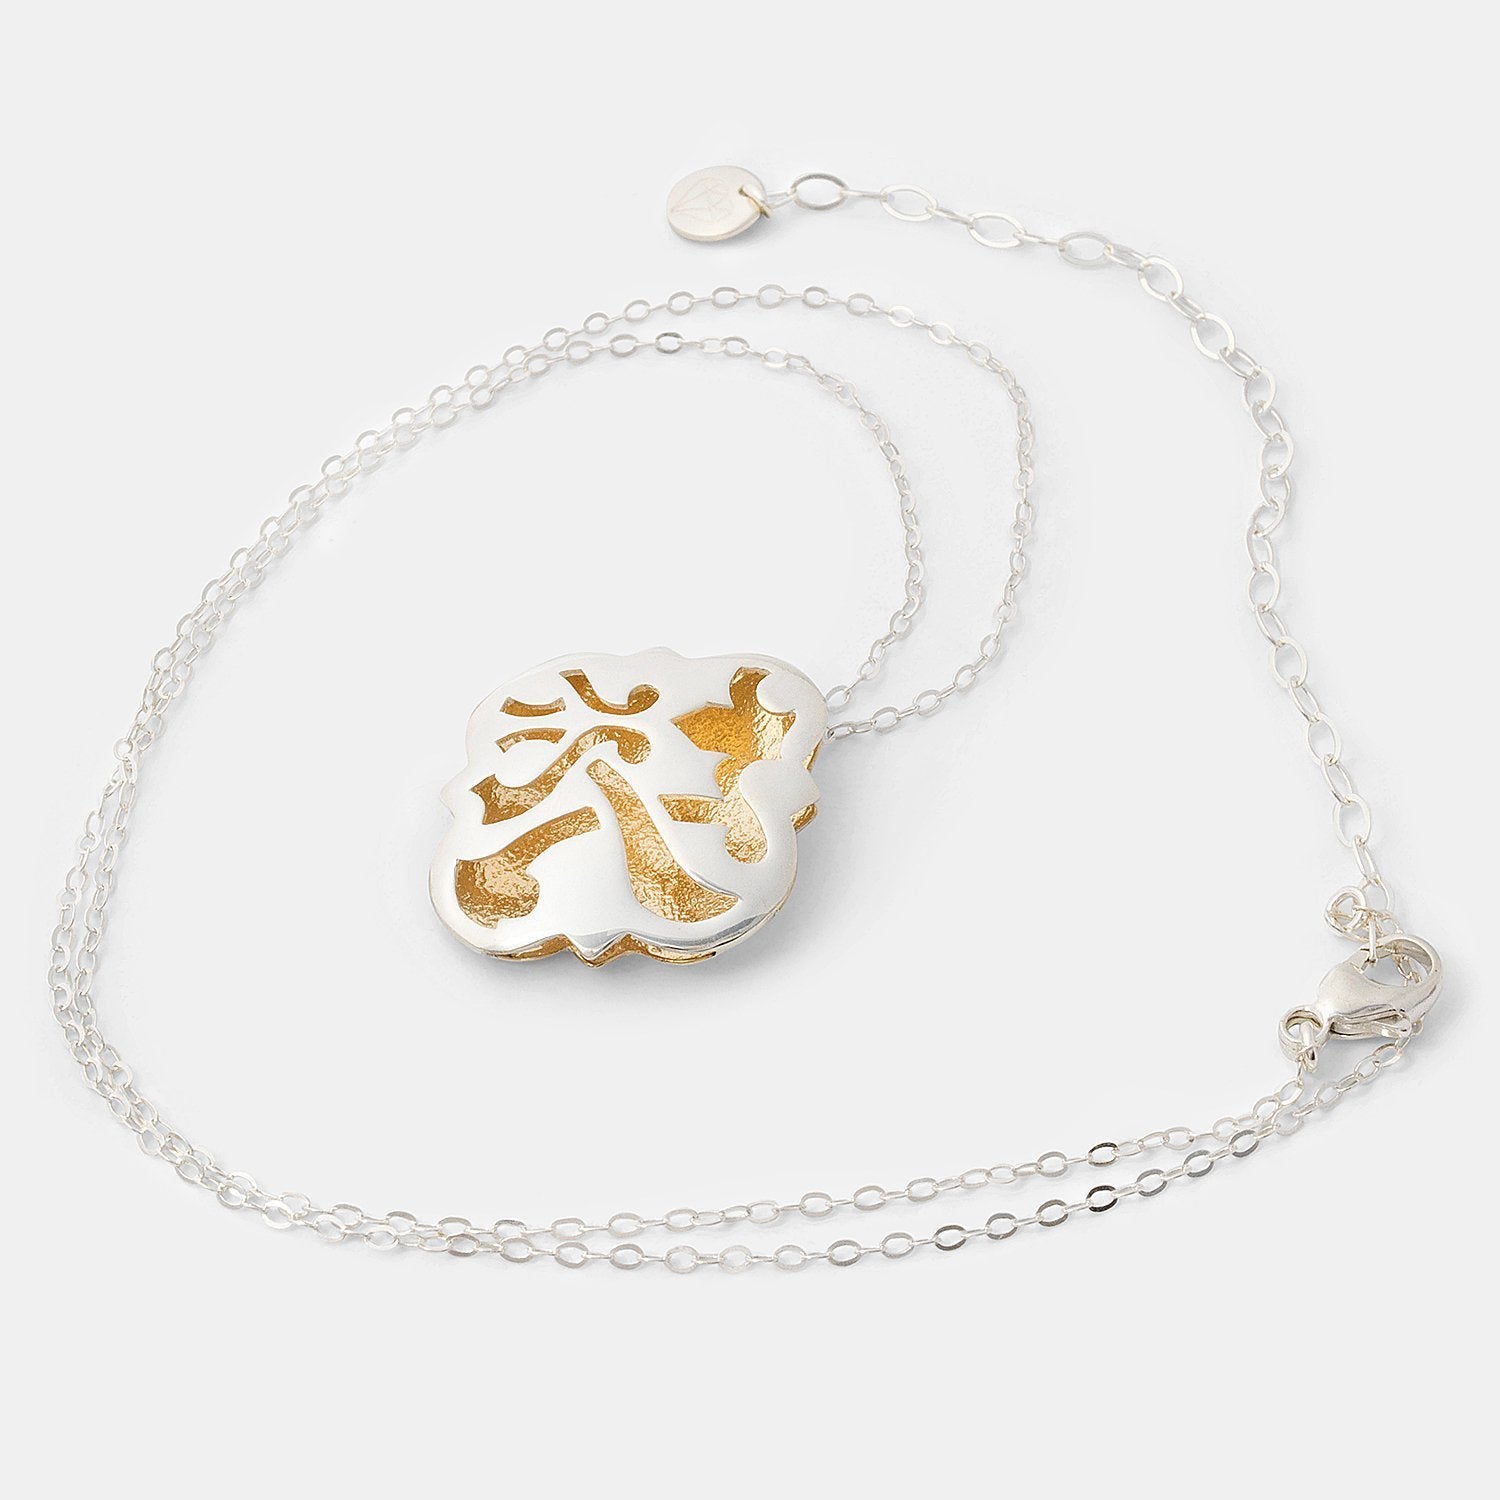 Quatrefoil pendant with gold - Simone Walsh Jewellery Australia